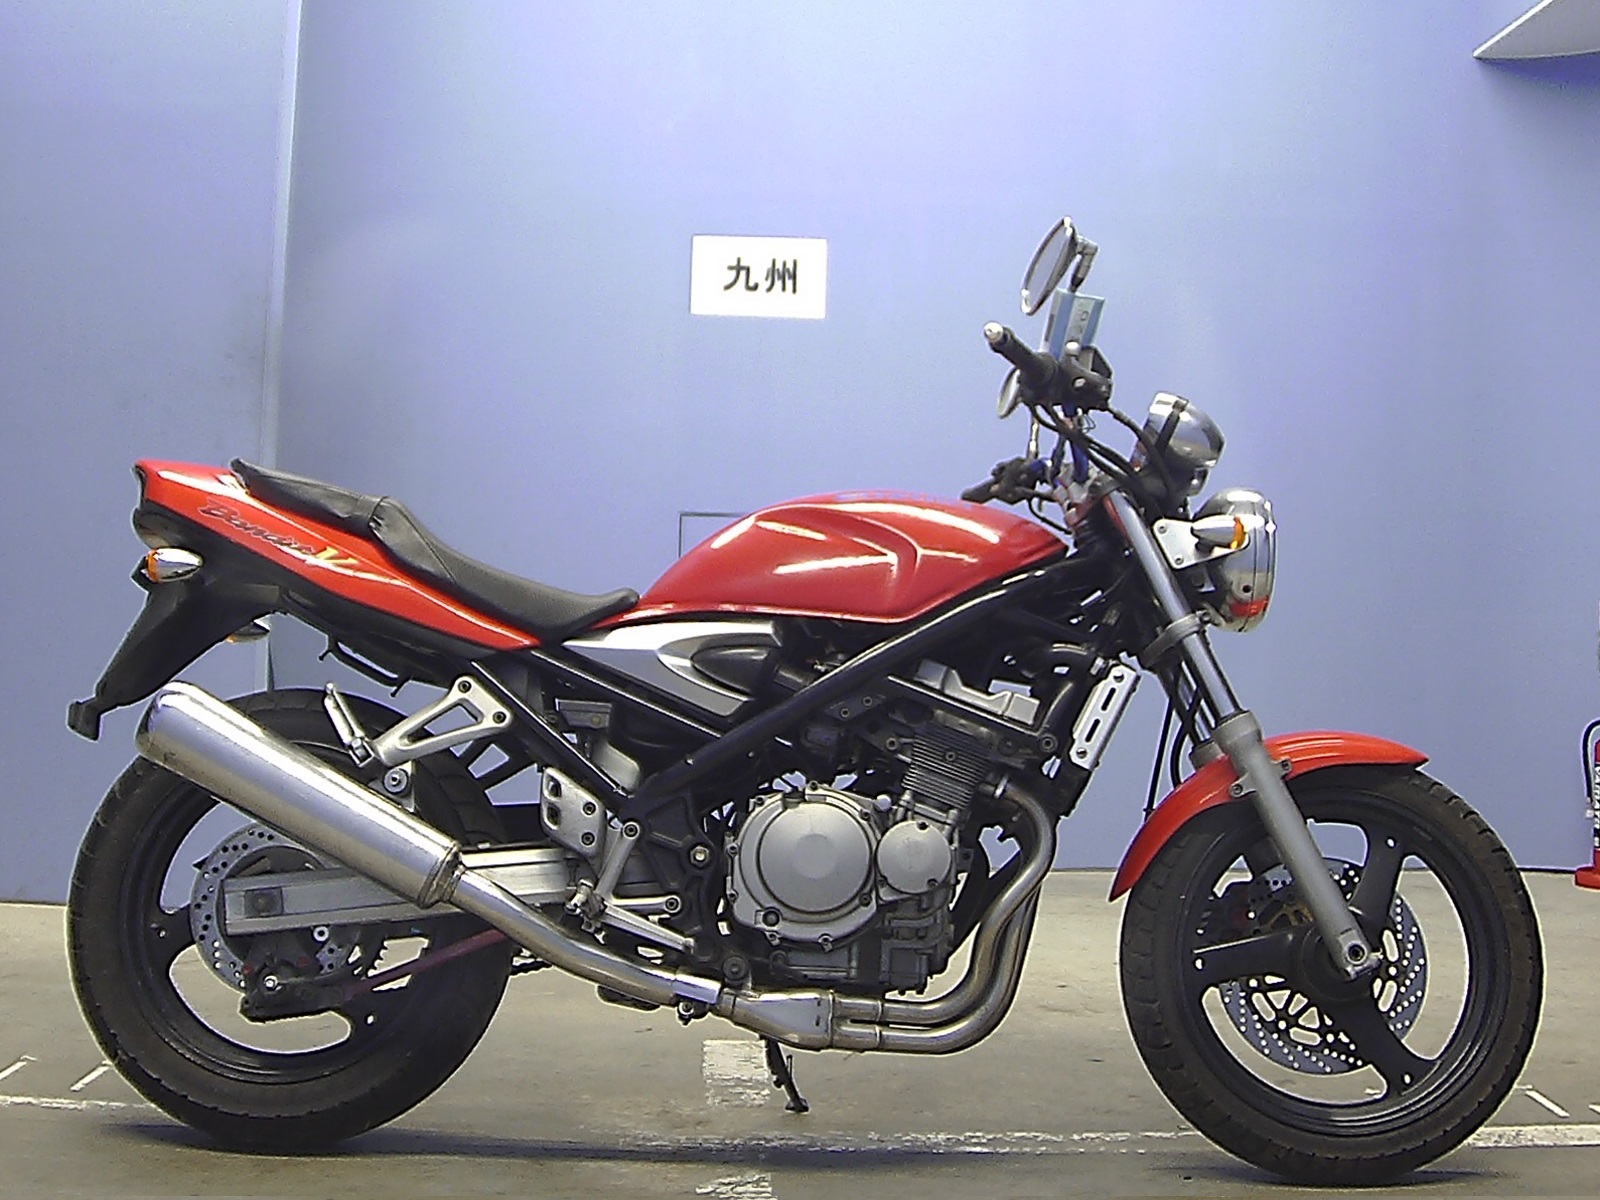 Инструкция по замене масла на мотоцикле Suzuki Bandit GSF 250, 400